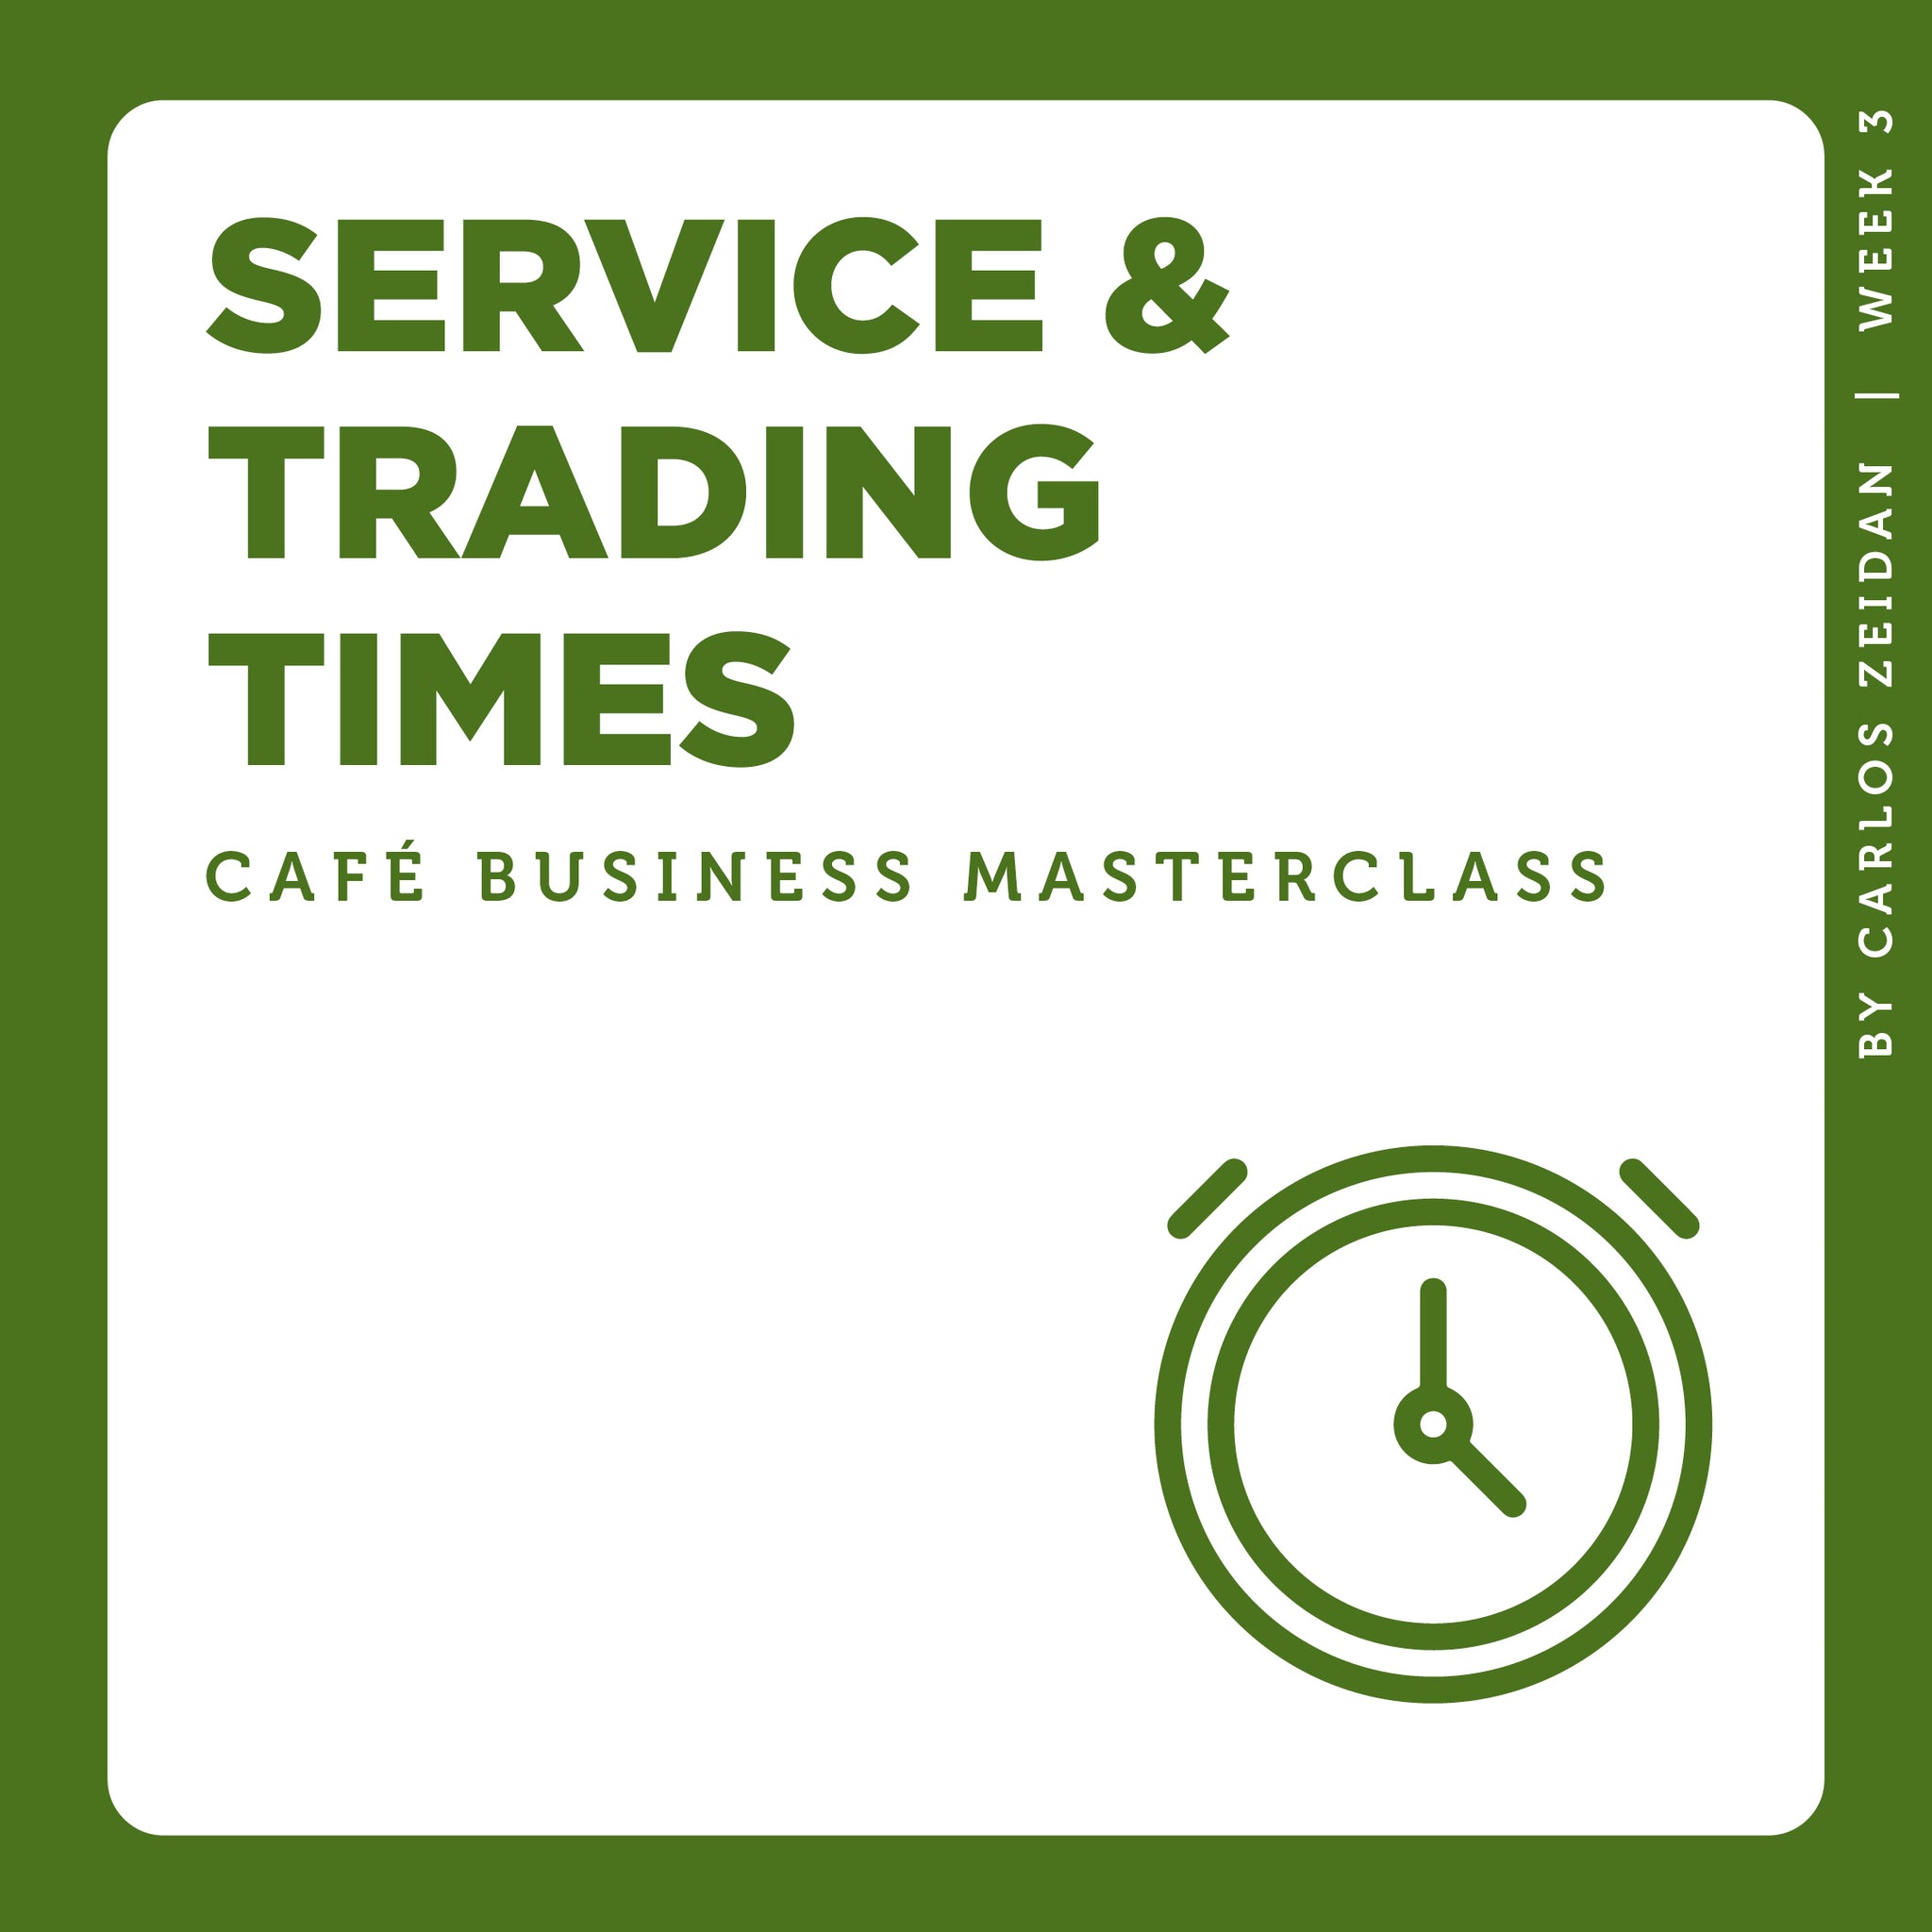 Café Business Masterclass: Service Times & Trading Times